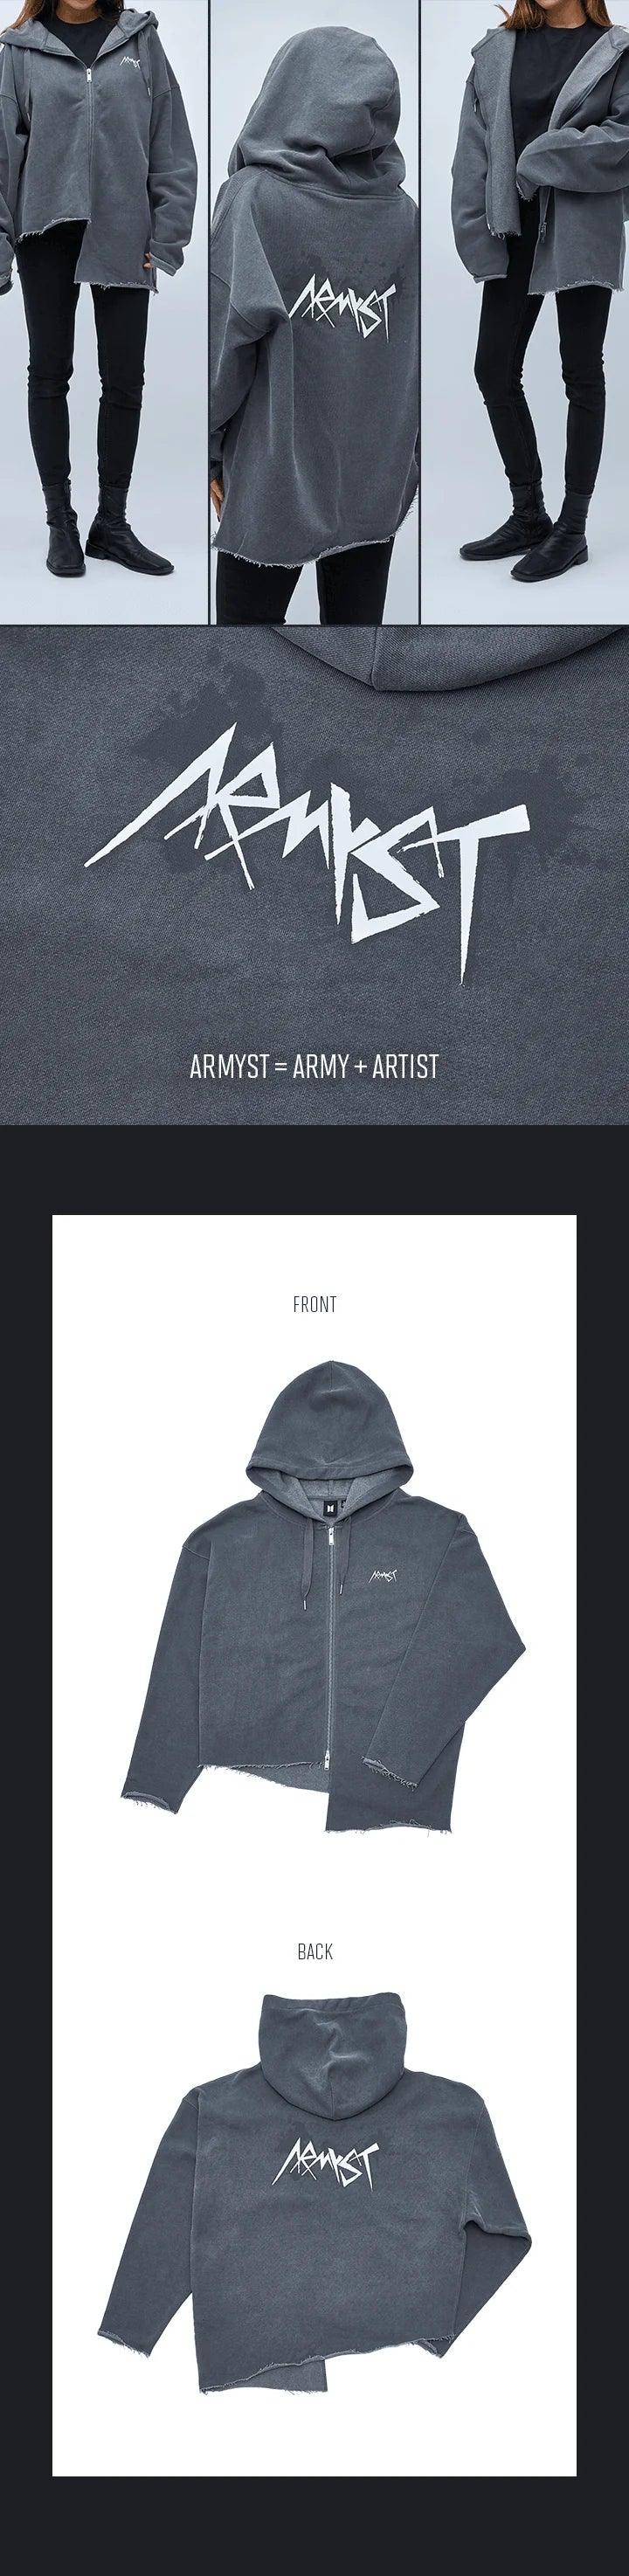 [3rd PRE ORDER] BTS - ARTIST-MADE COLLECTION by JUNGKOOK - ARMYST ZIP-UP HOODY - KAEPJJANG SHOP (캡짱 숍)